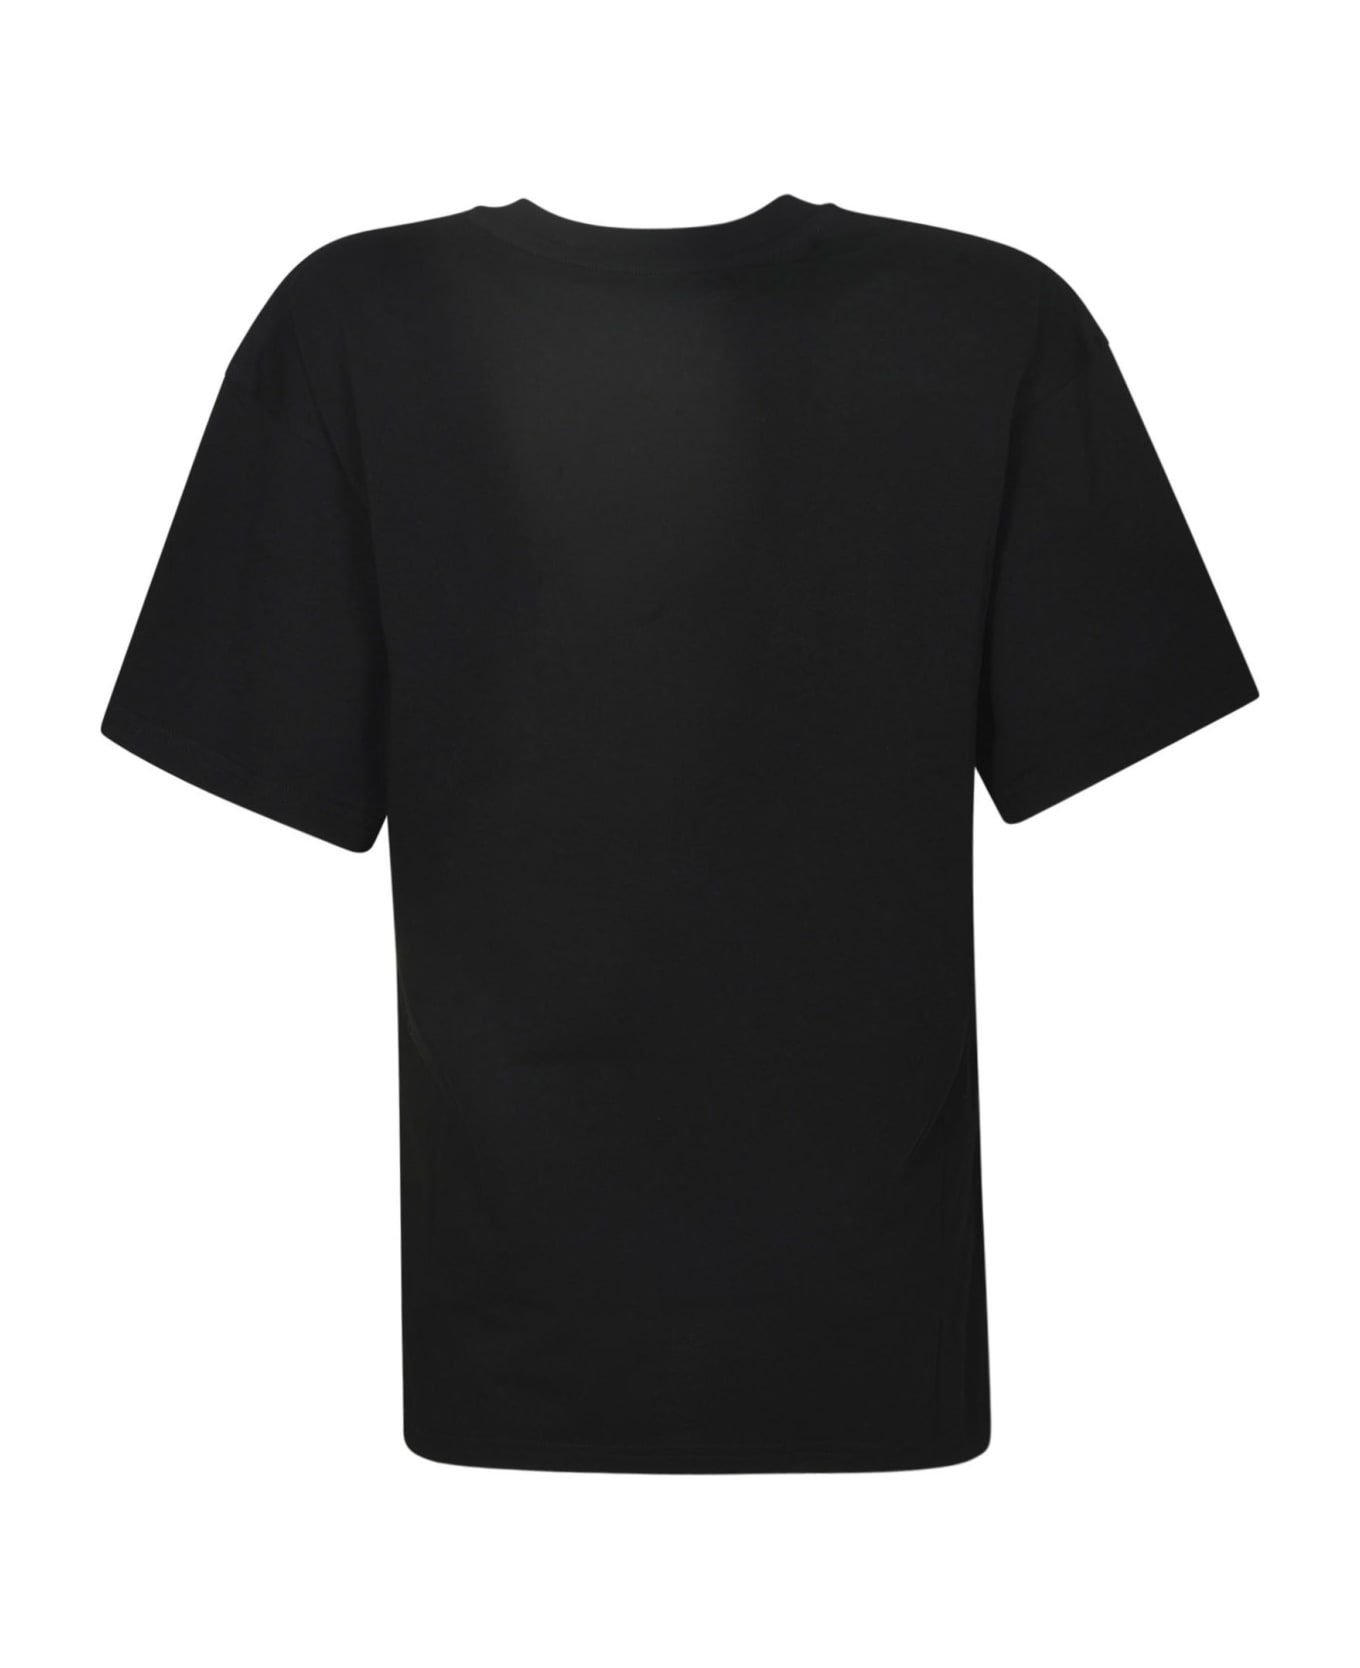 Moschino Teddy 40 Years Of Love T-shirt - Black Tシャツ